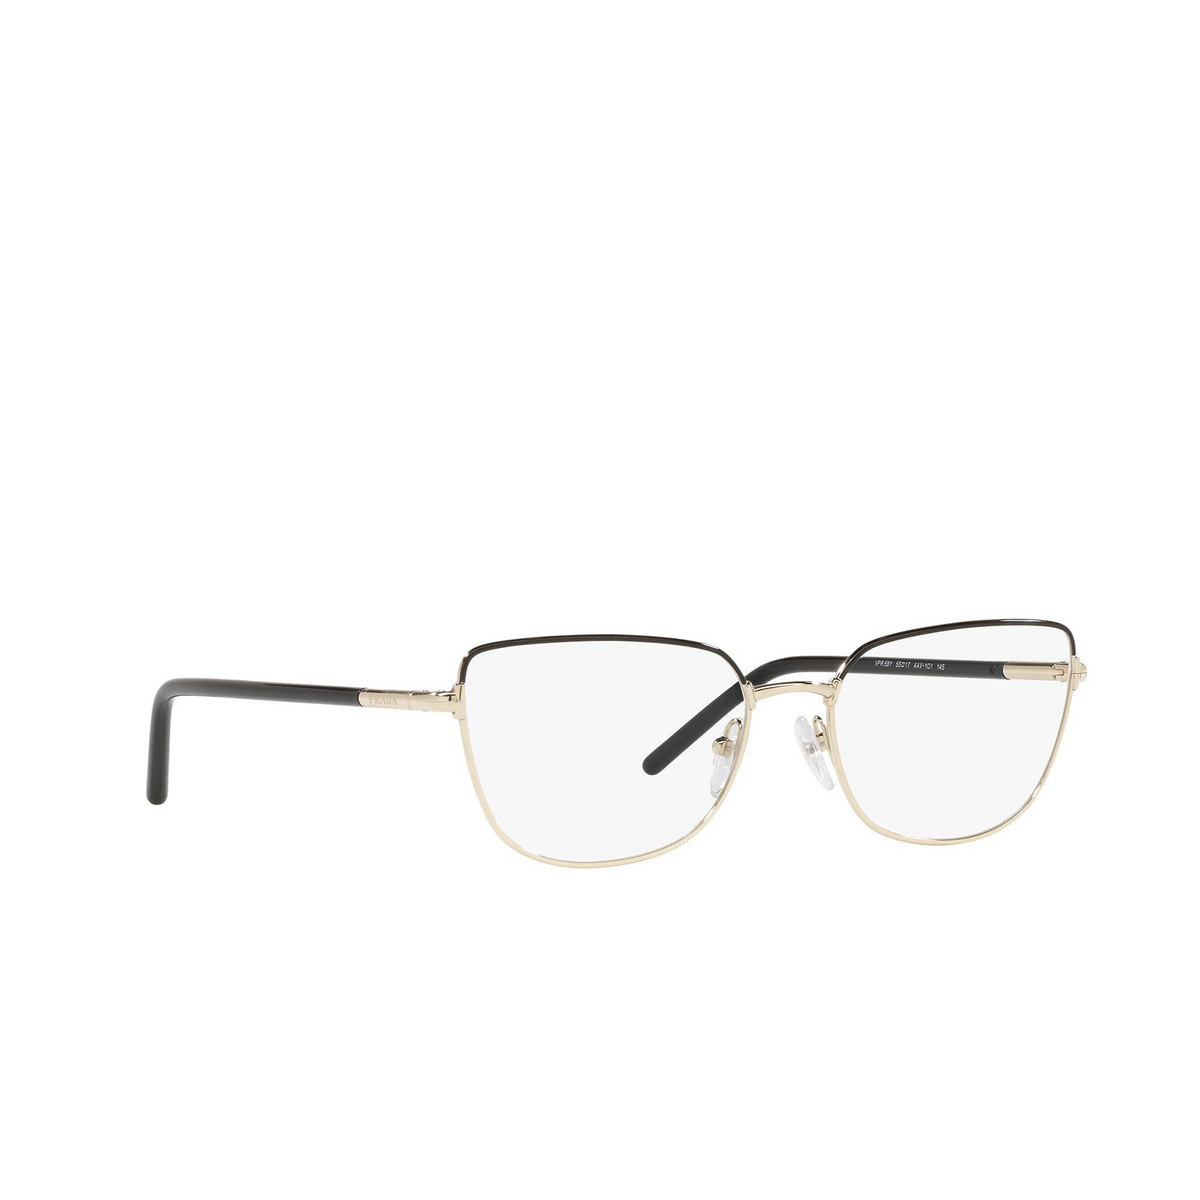 Prada® Butterfly Eyeglasses: PR 59YV color Black / Pale Gold AAV1O1 - three-quarters view.